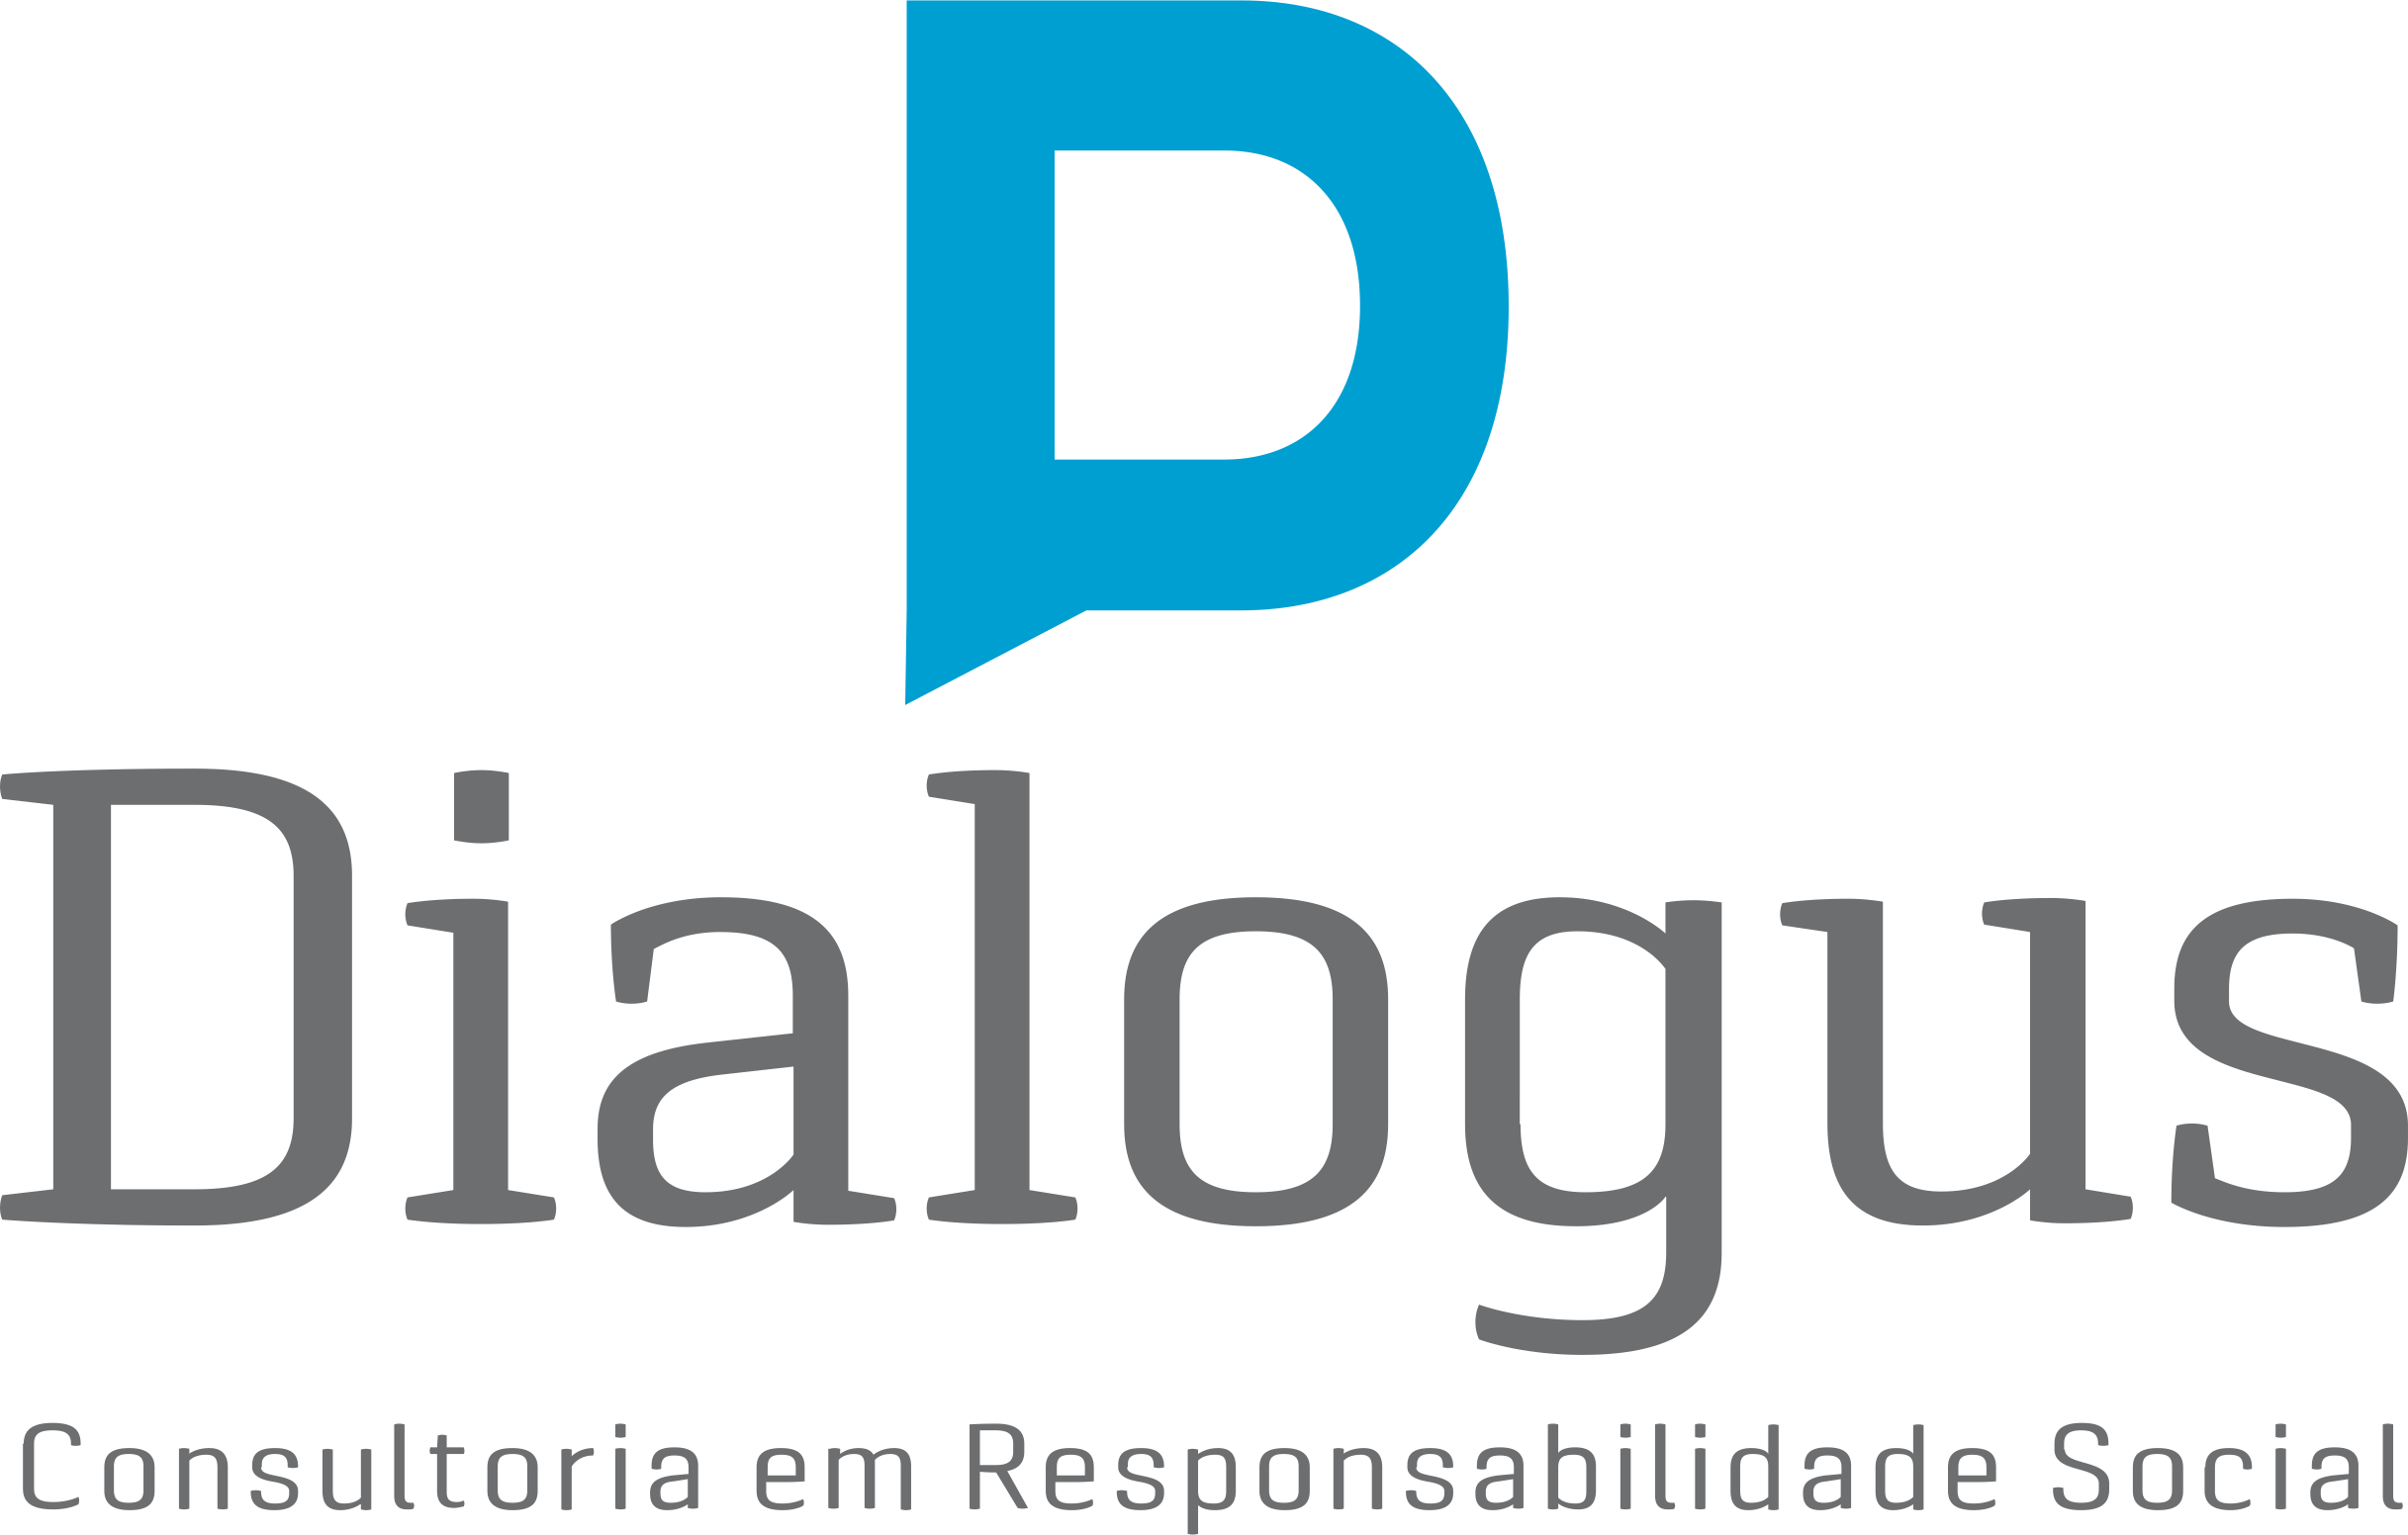 Dialogus Responsabilidade Social - Consultoria - Relacionamento com Stakeholders - Fortaleza/CE